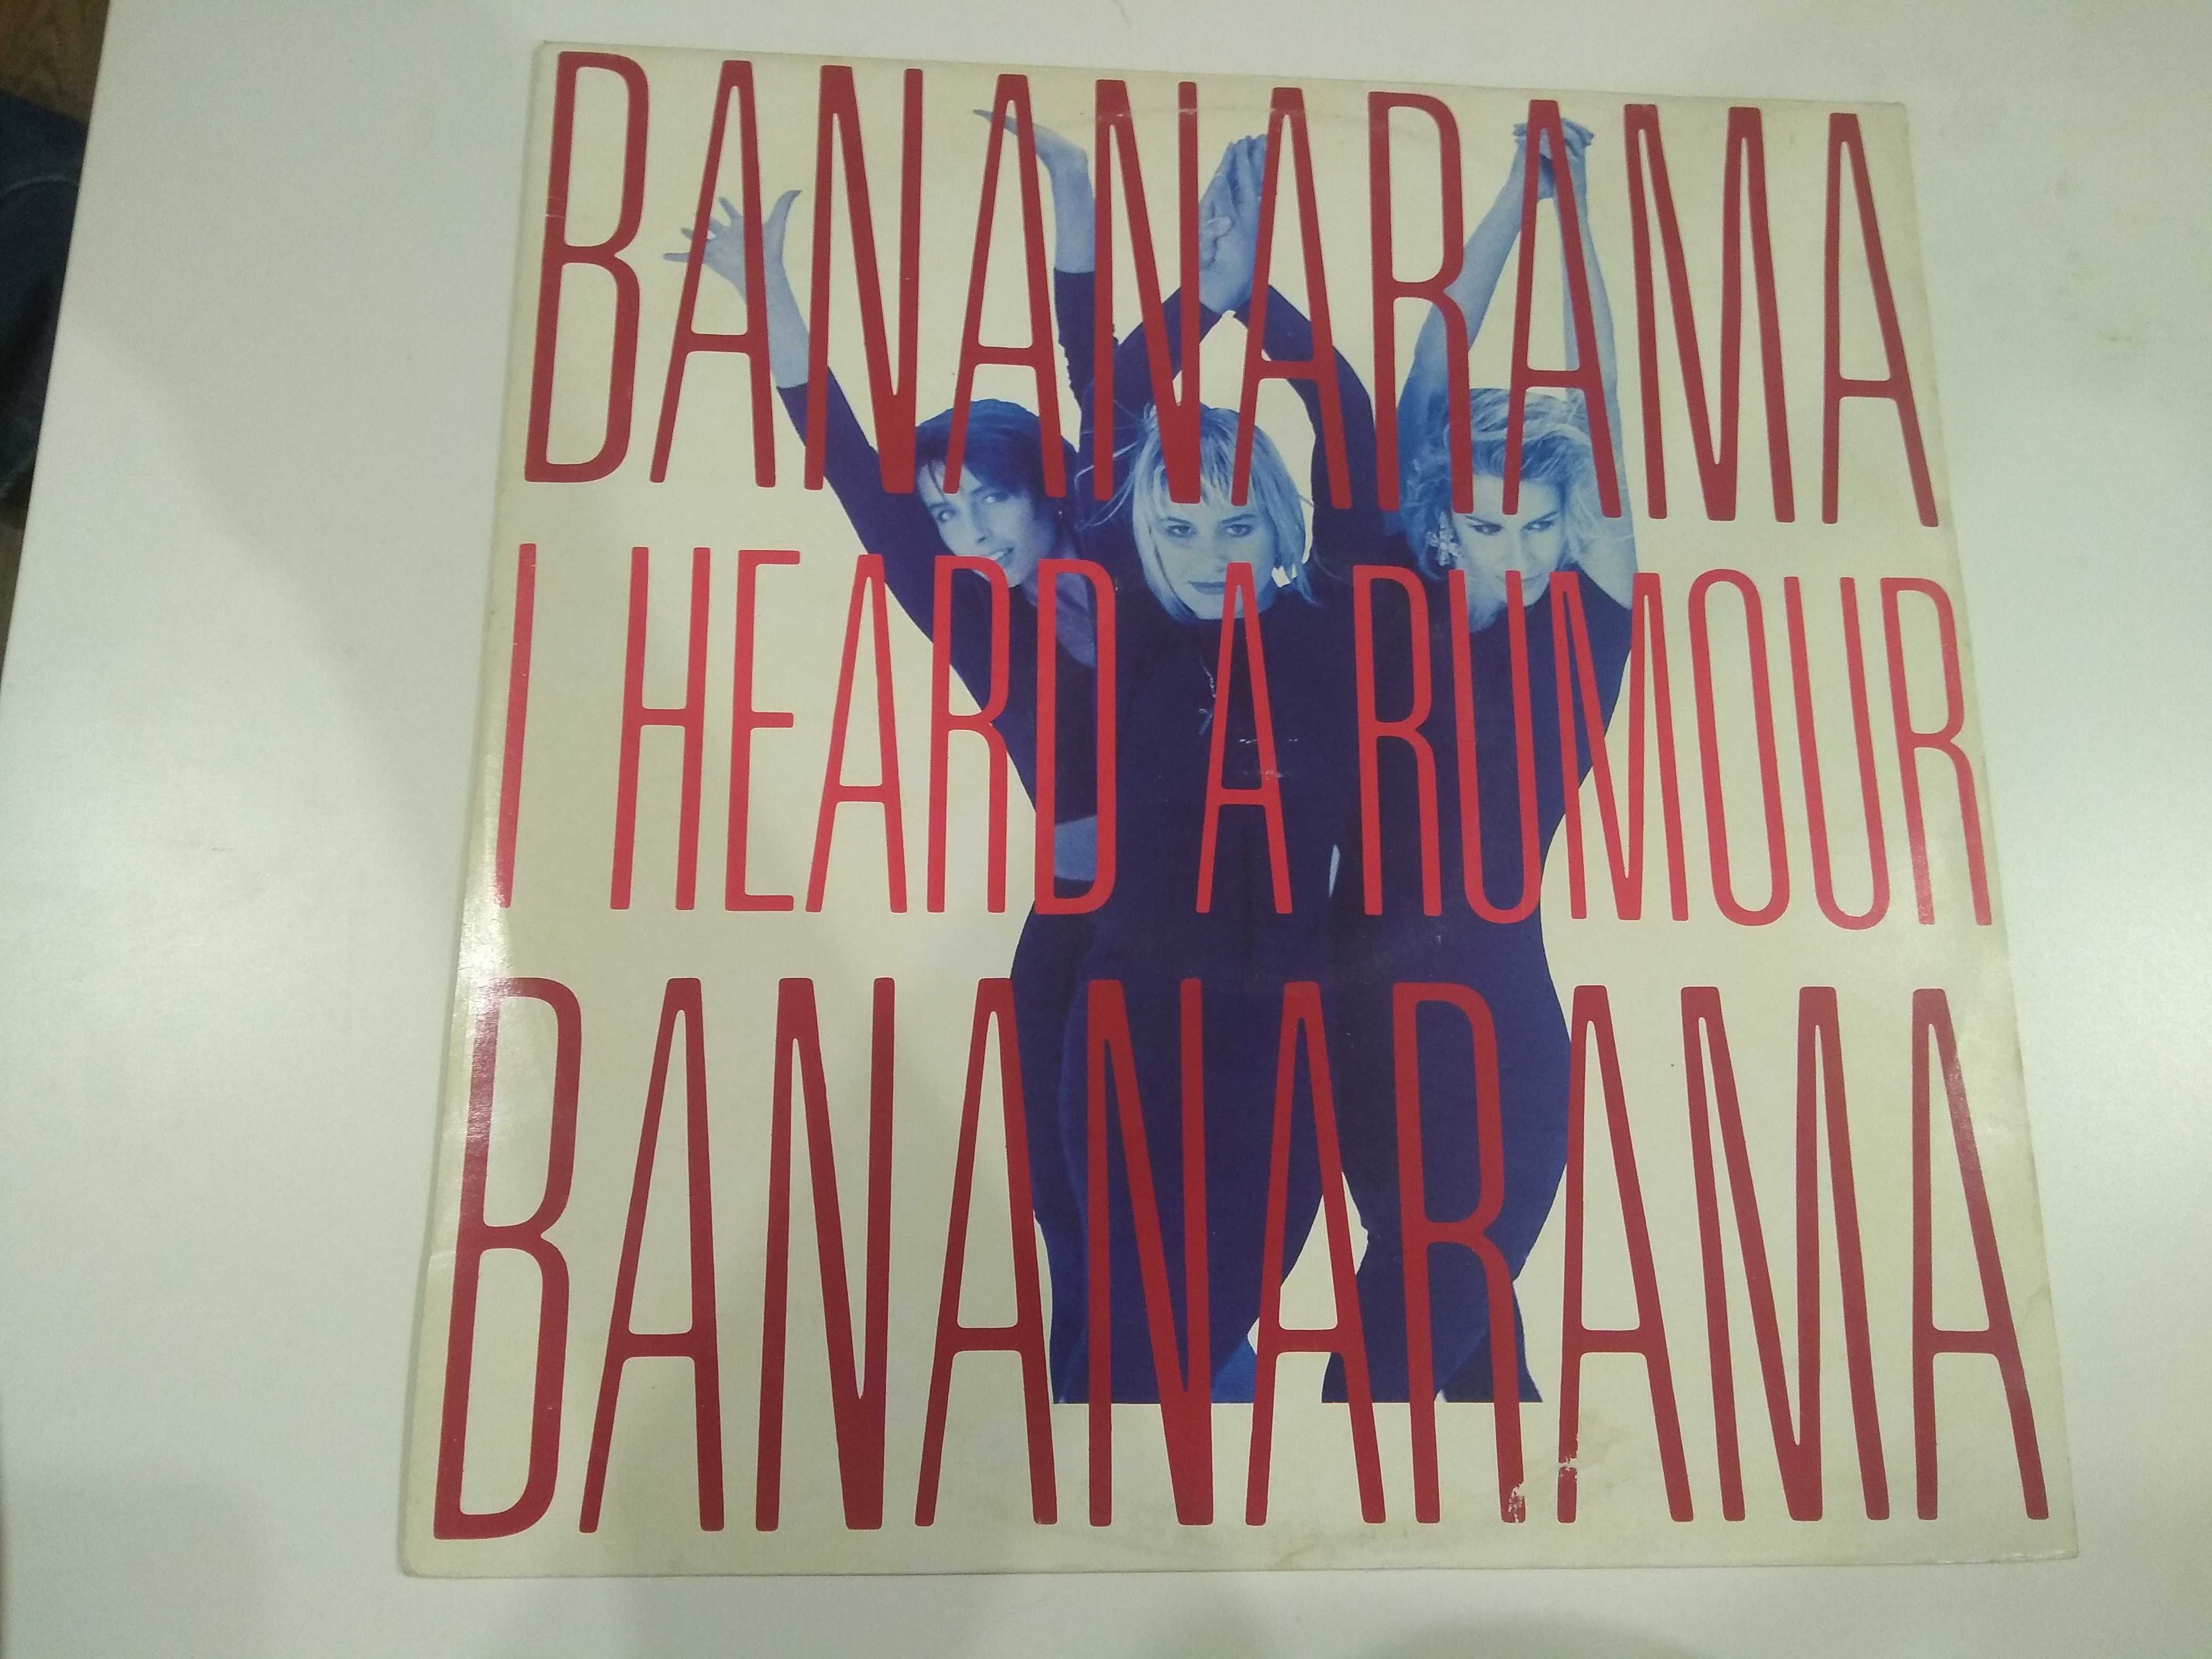 Dobra płyta - Bananrama i heard a rumour